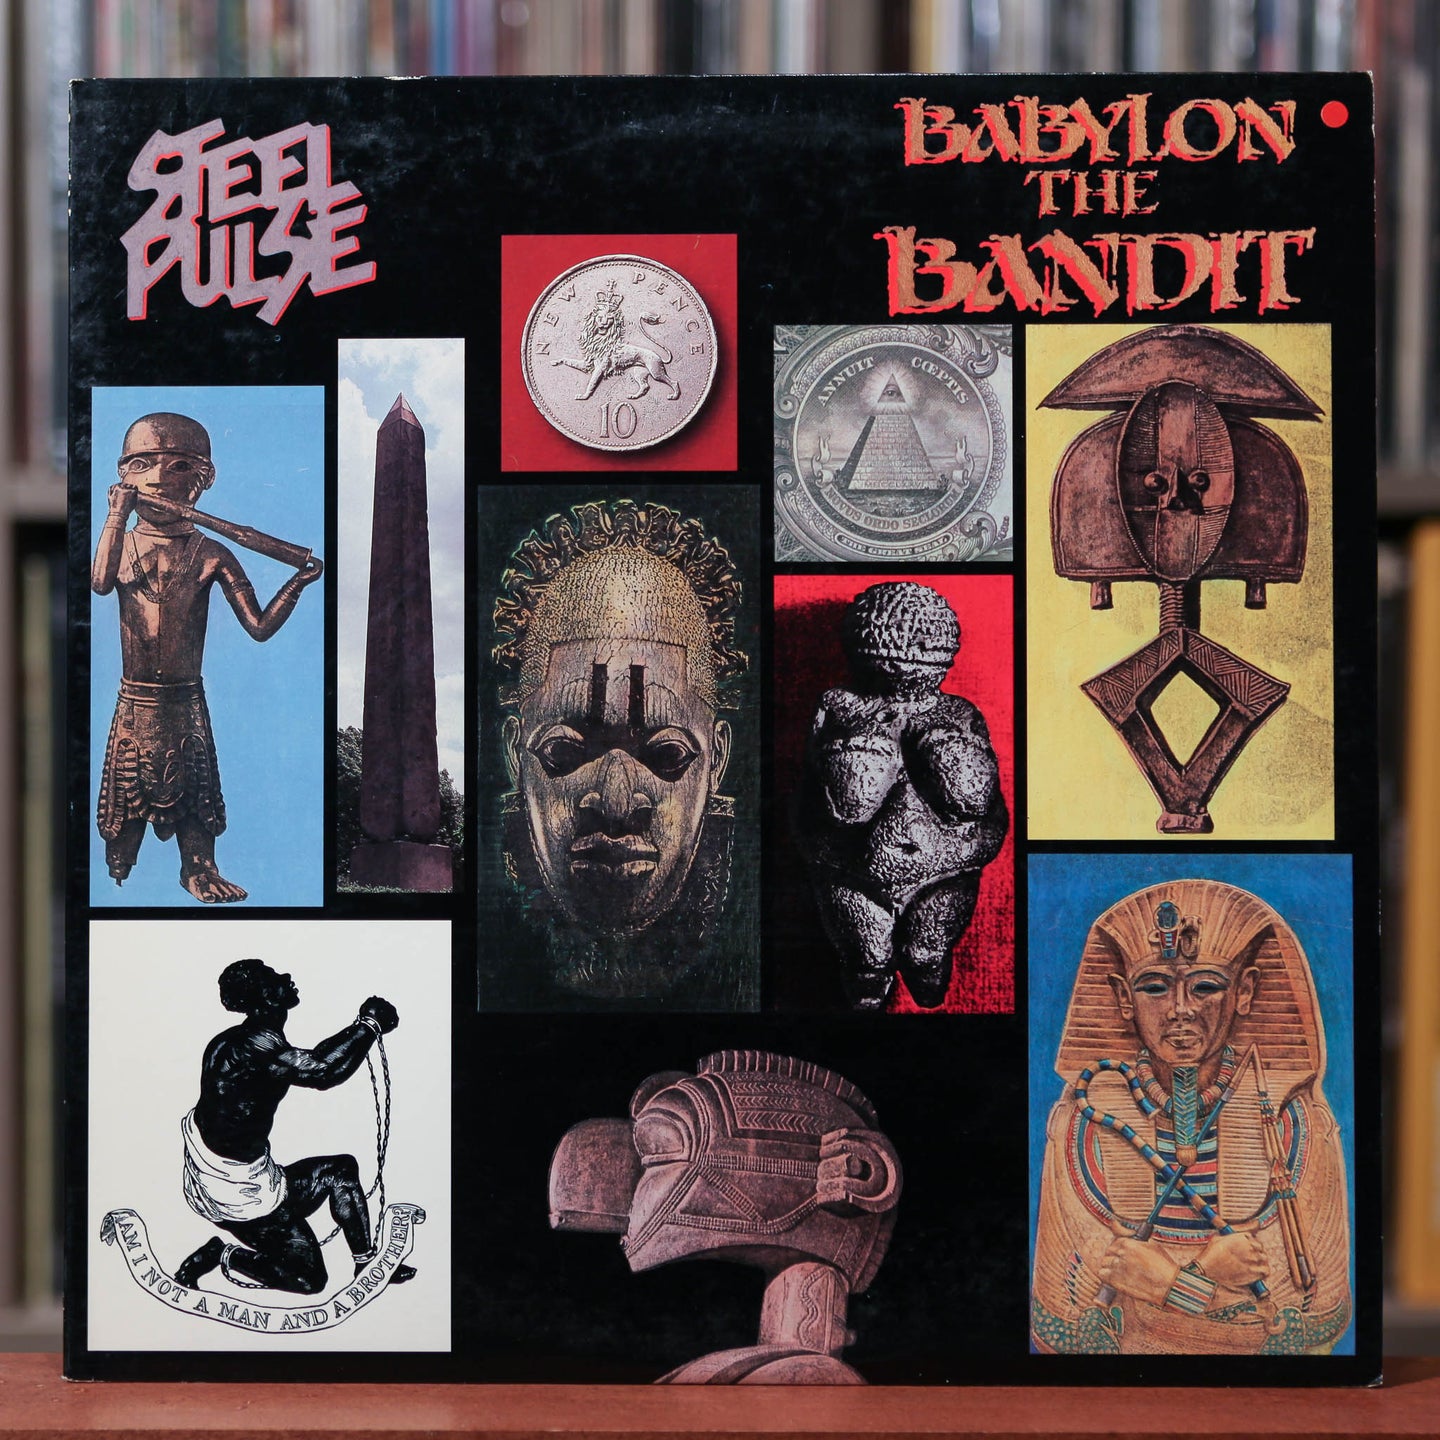 Steel Pulse - Babylon The Bandit - 1985 Elektra, EX/EX